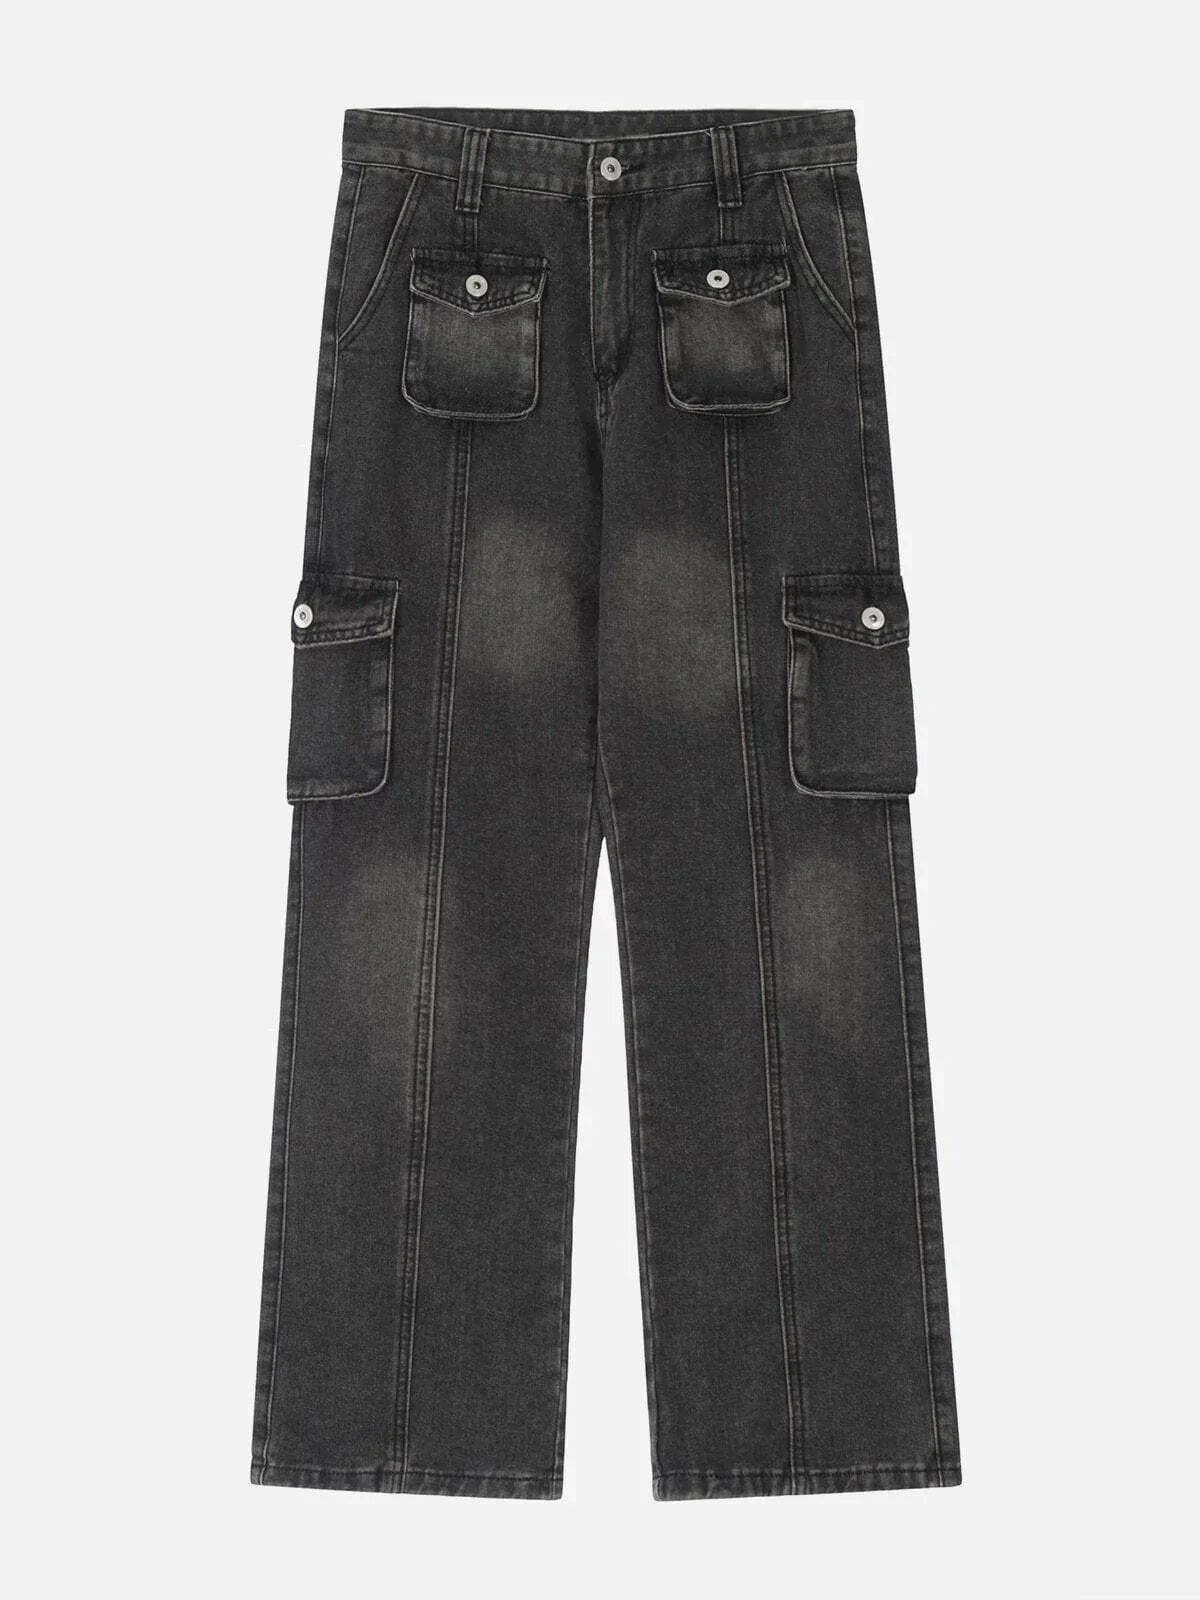 multipocket vintage jeans edgy & retro streetwear 5854